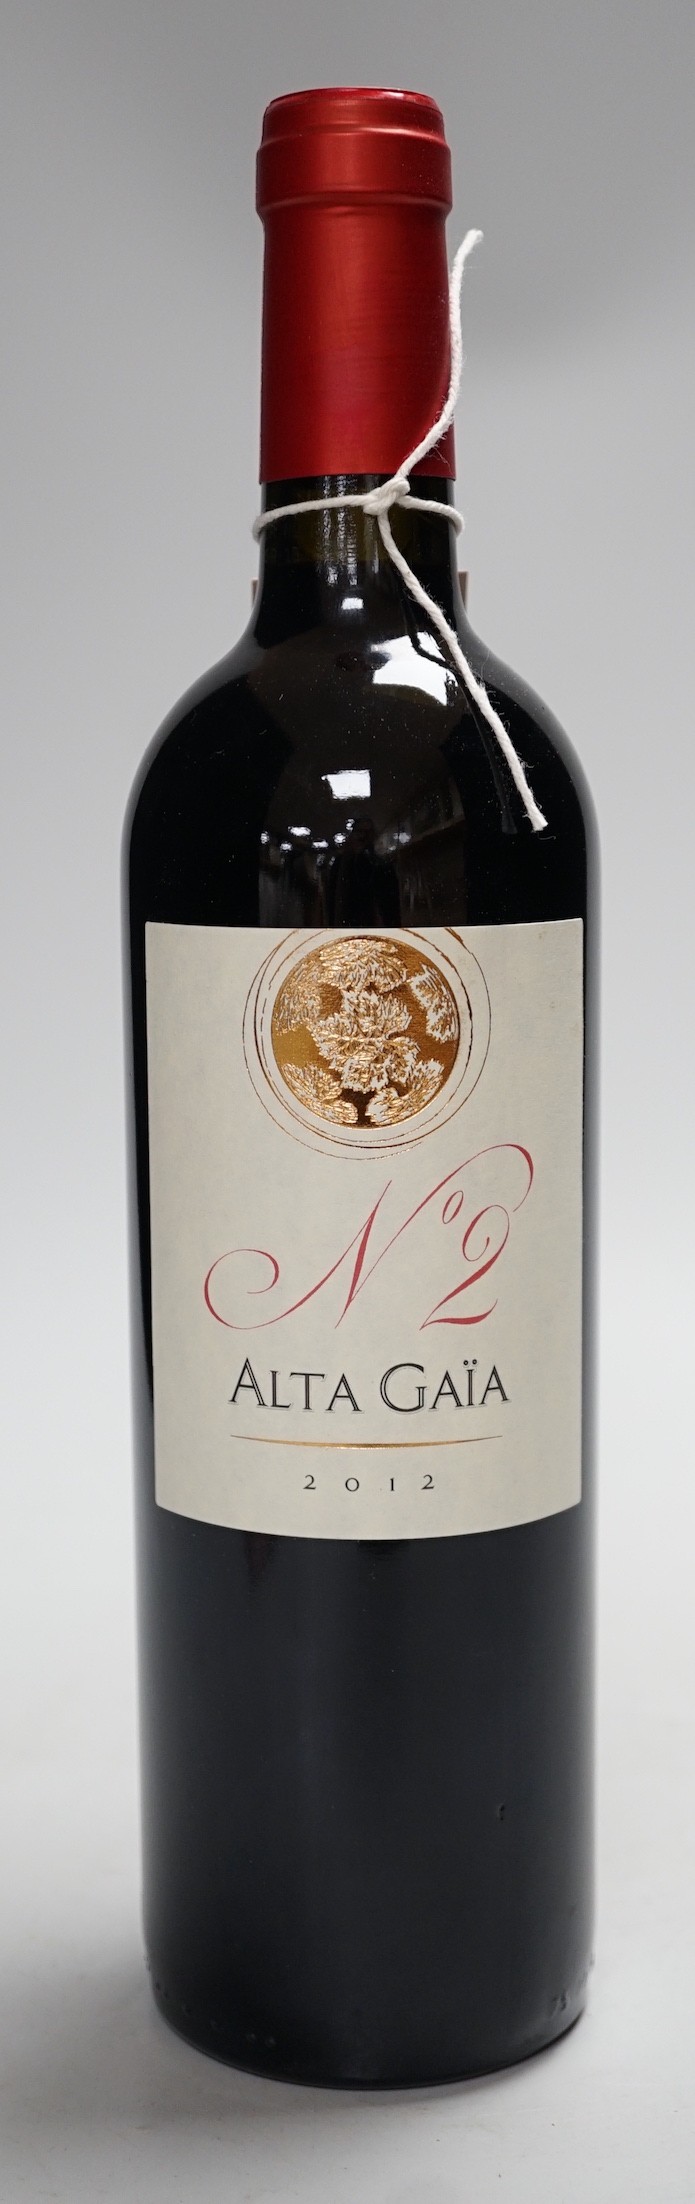 Six bottles of Chateau Alta Gaia, 2012 and six bottles of Alta Gaia Le No.2, 2012